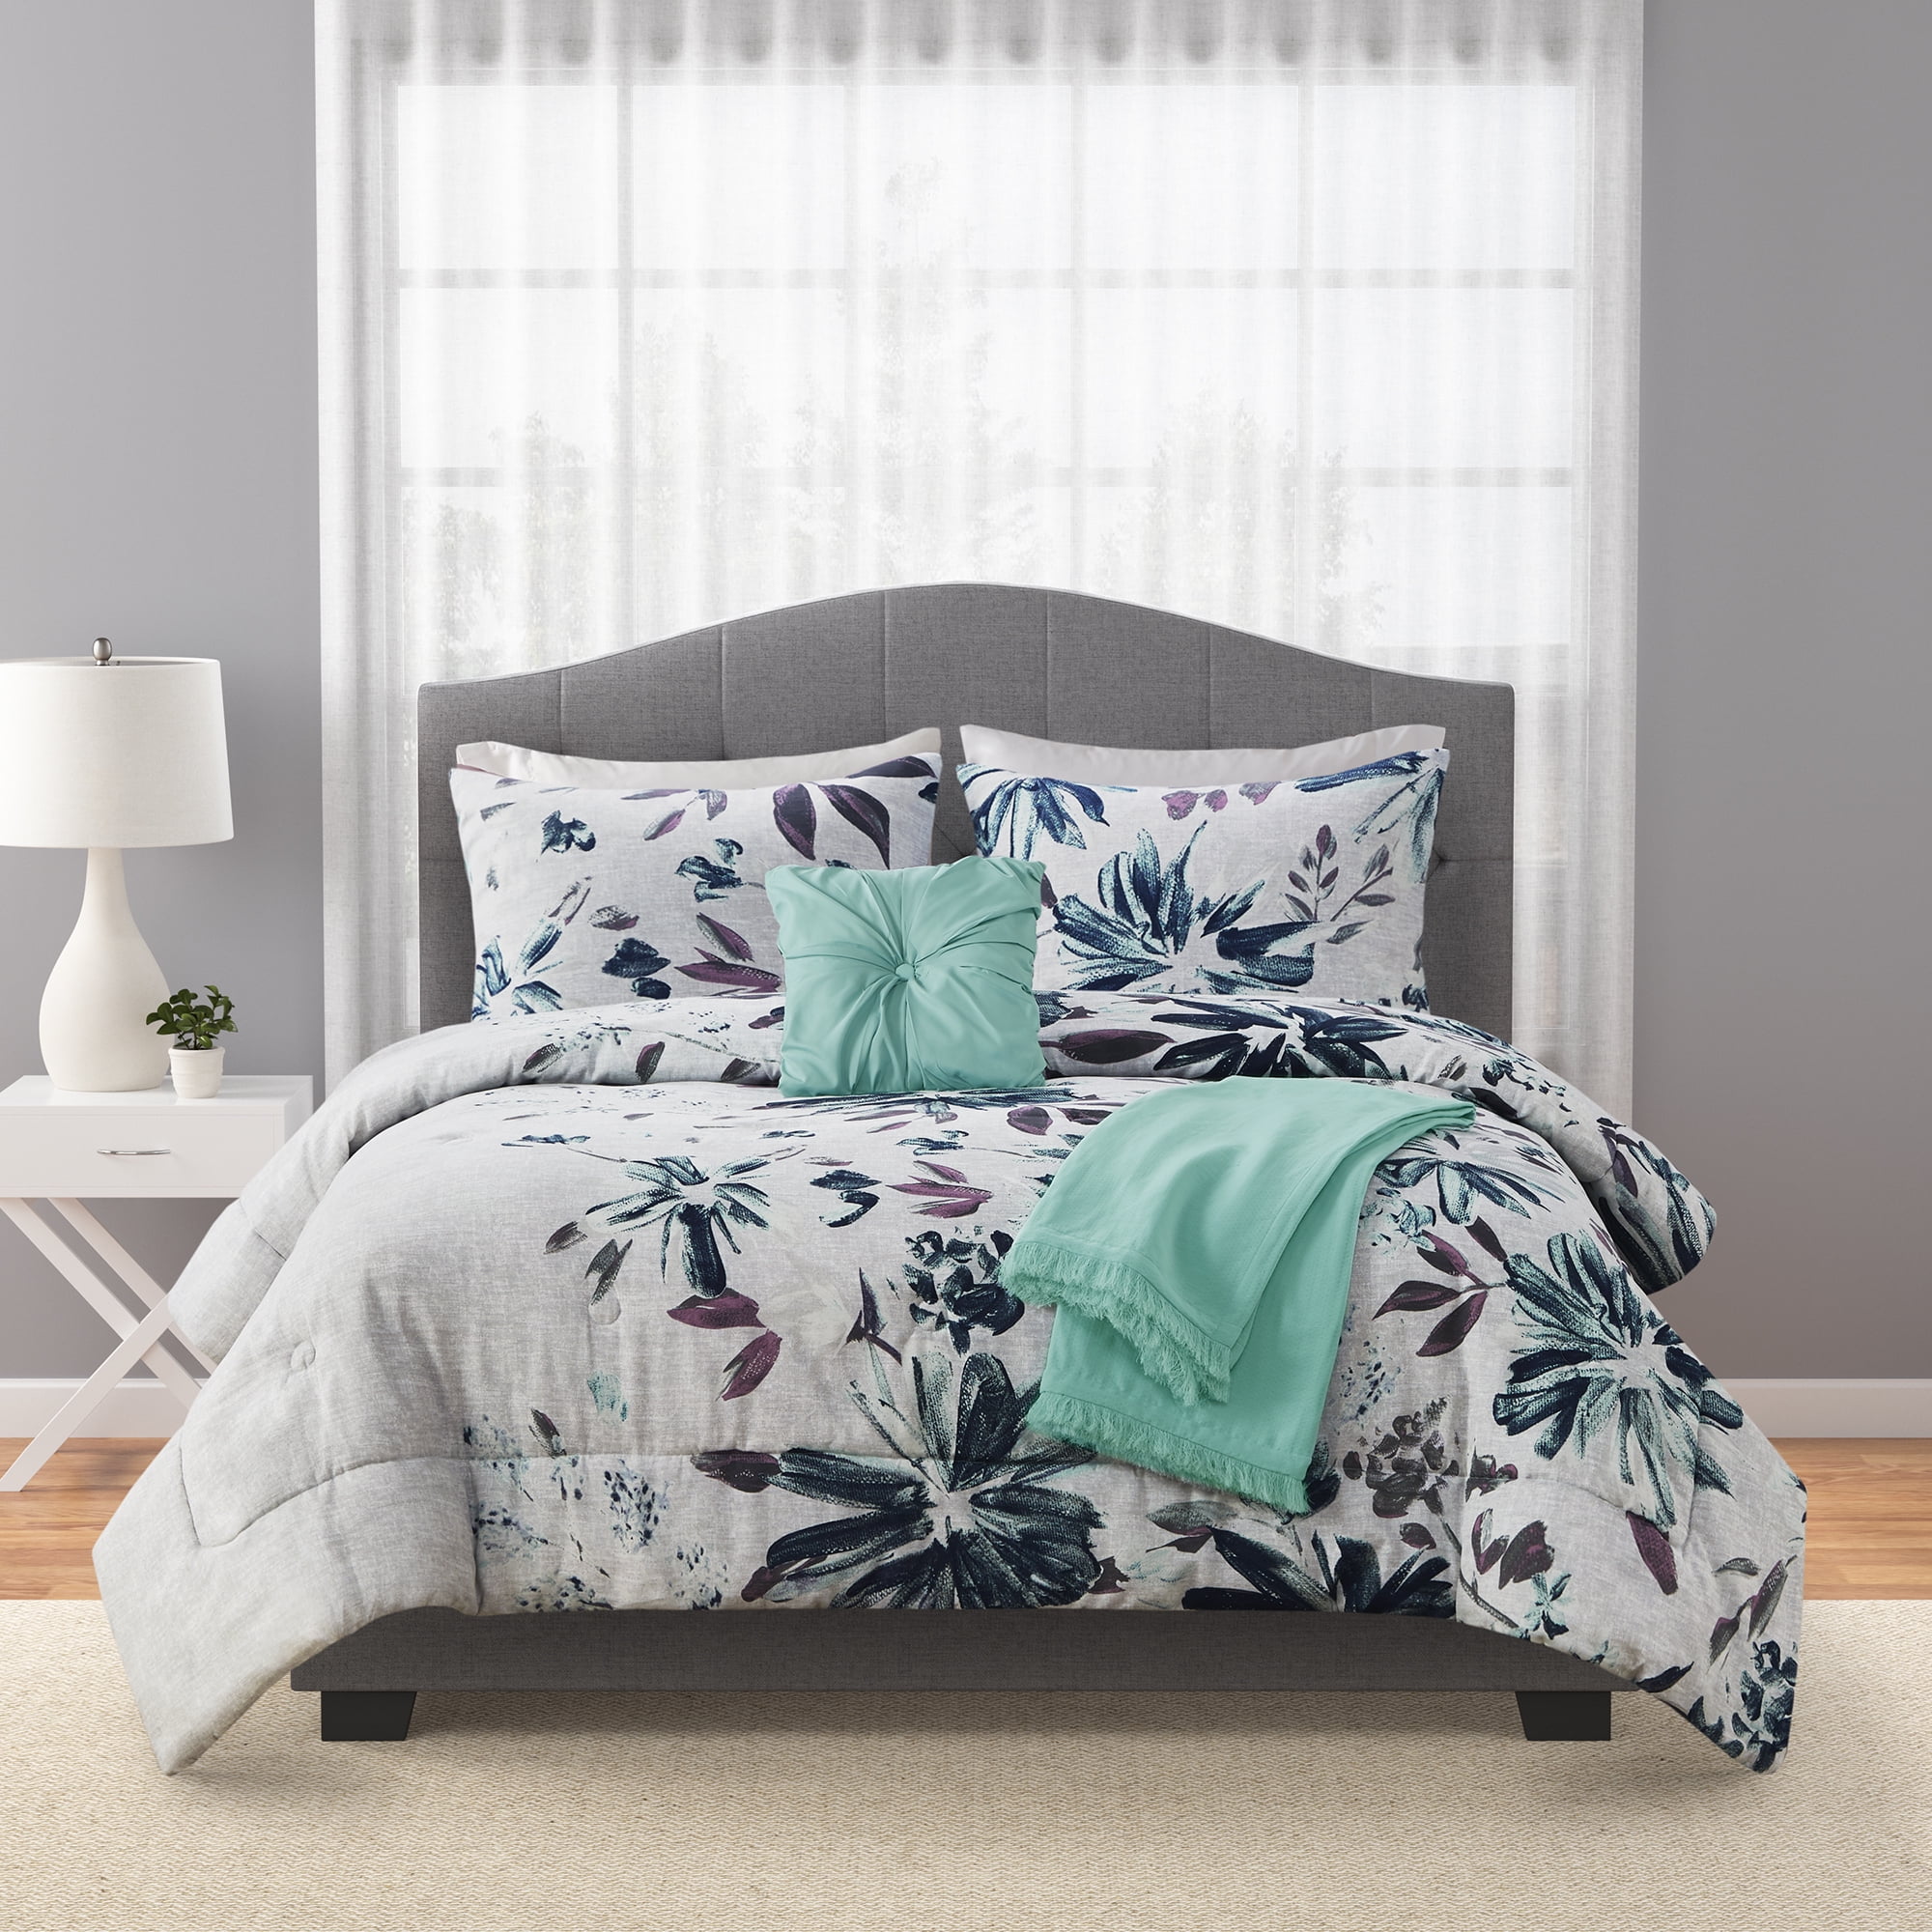 Mainstays 5-Piece Blue Floral Comforter Set, Full/Queen